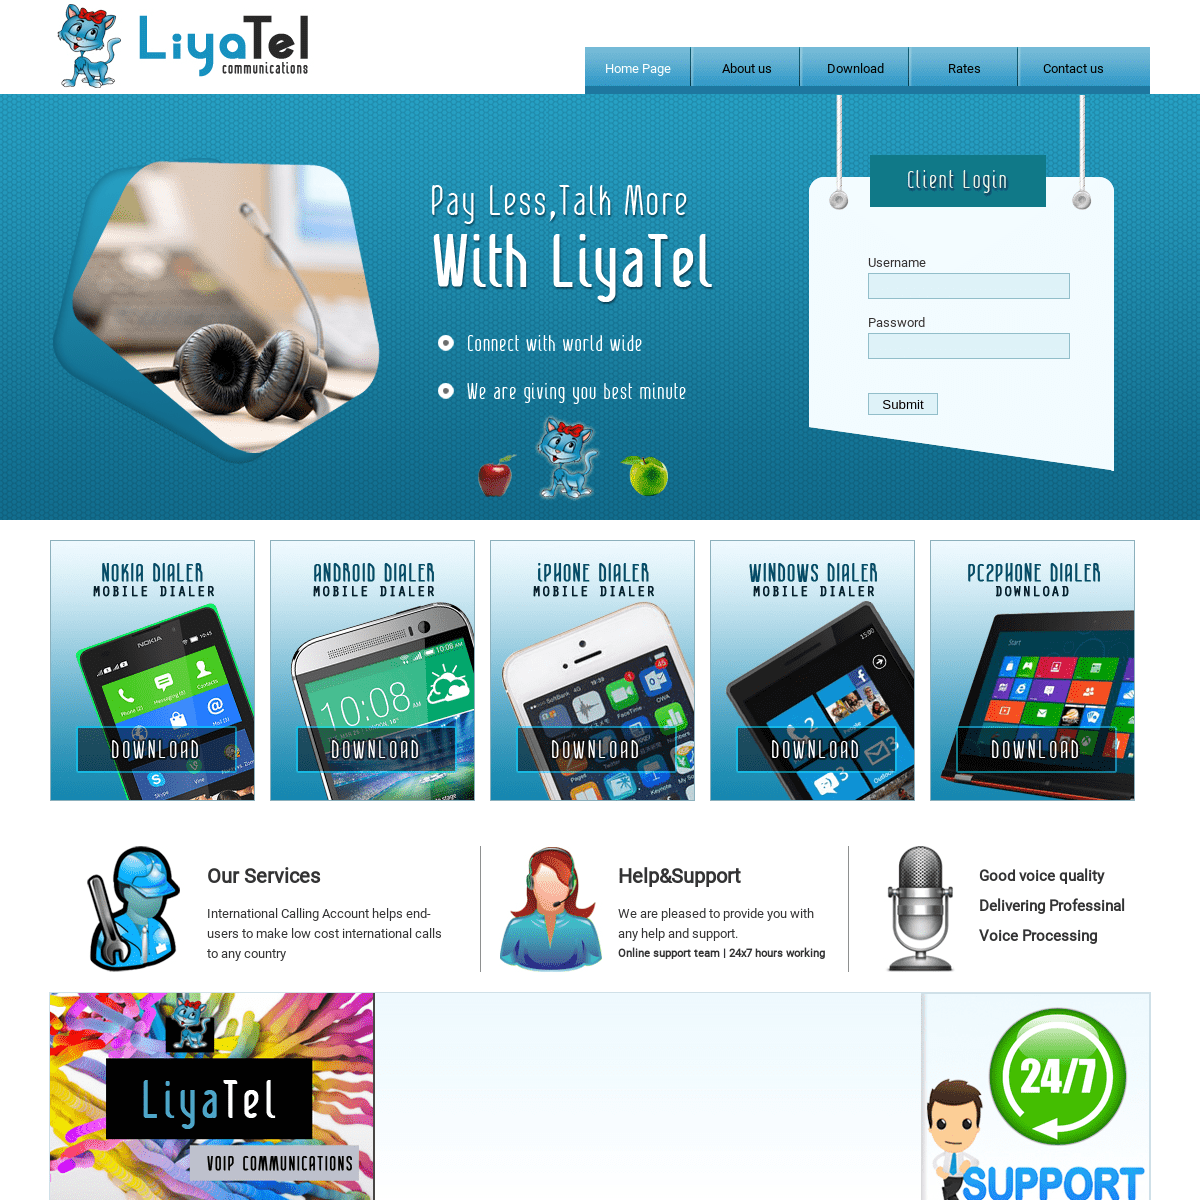 A complete backup of liyatel.com